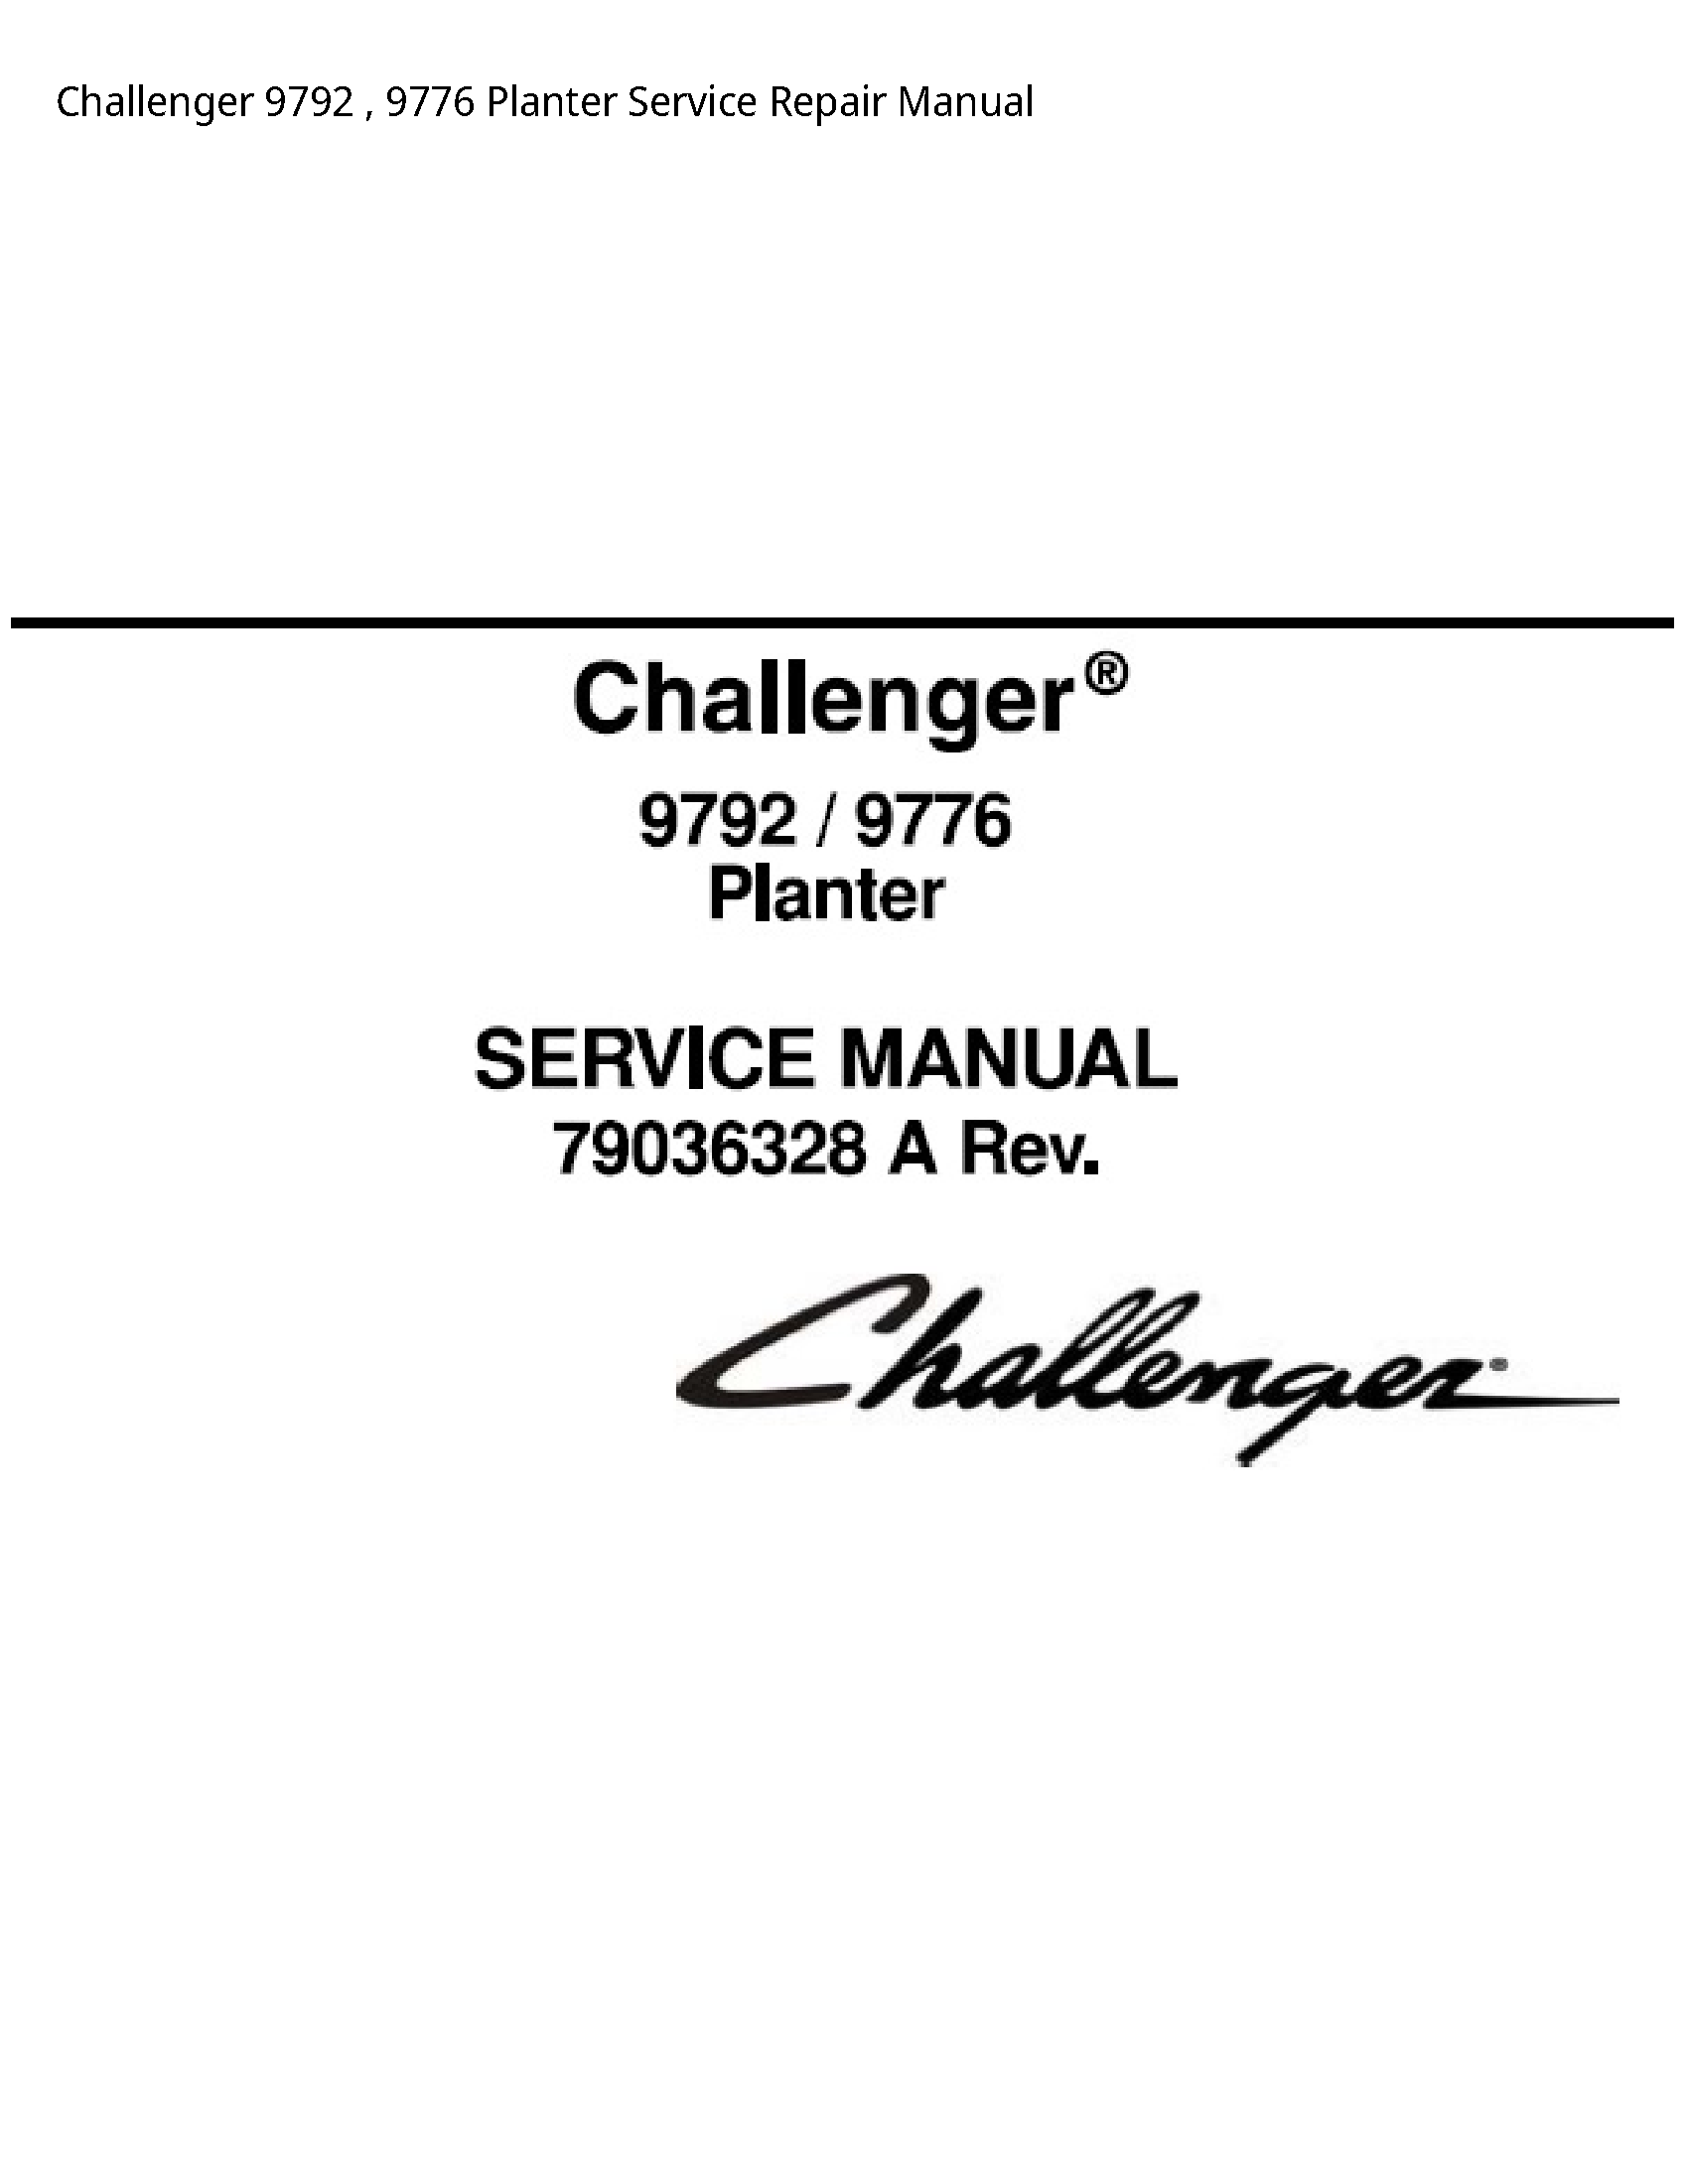 Challenger 9792 Planter manual